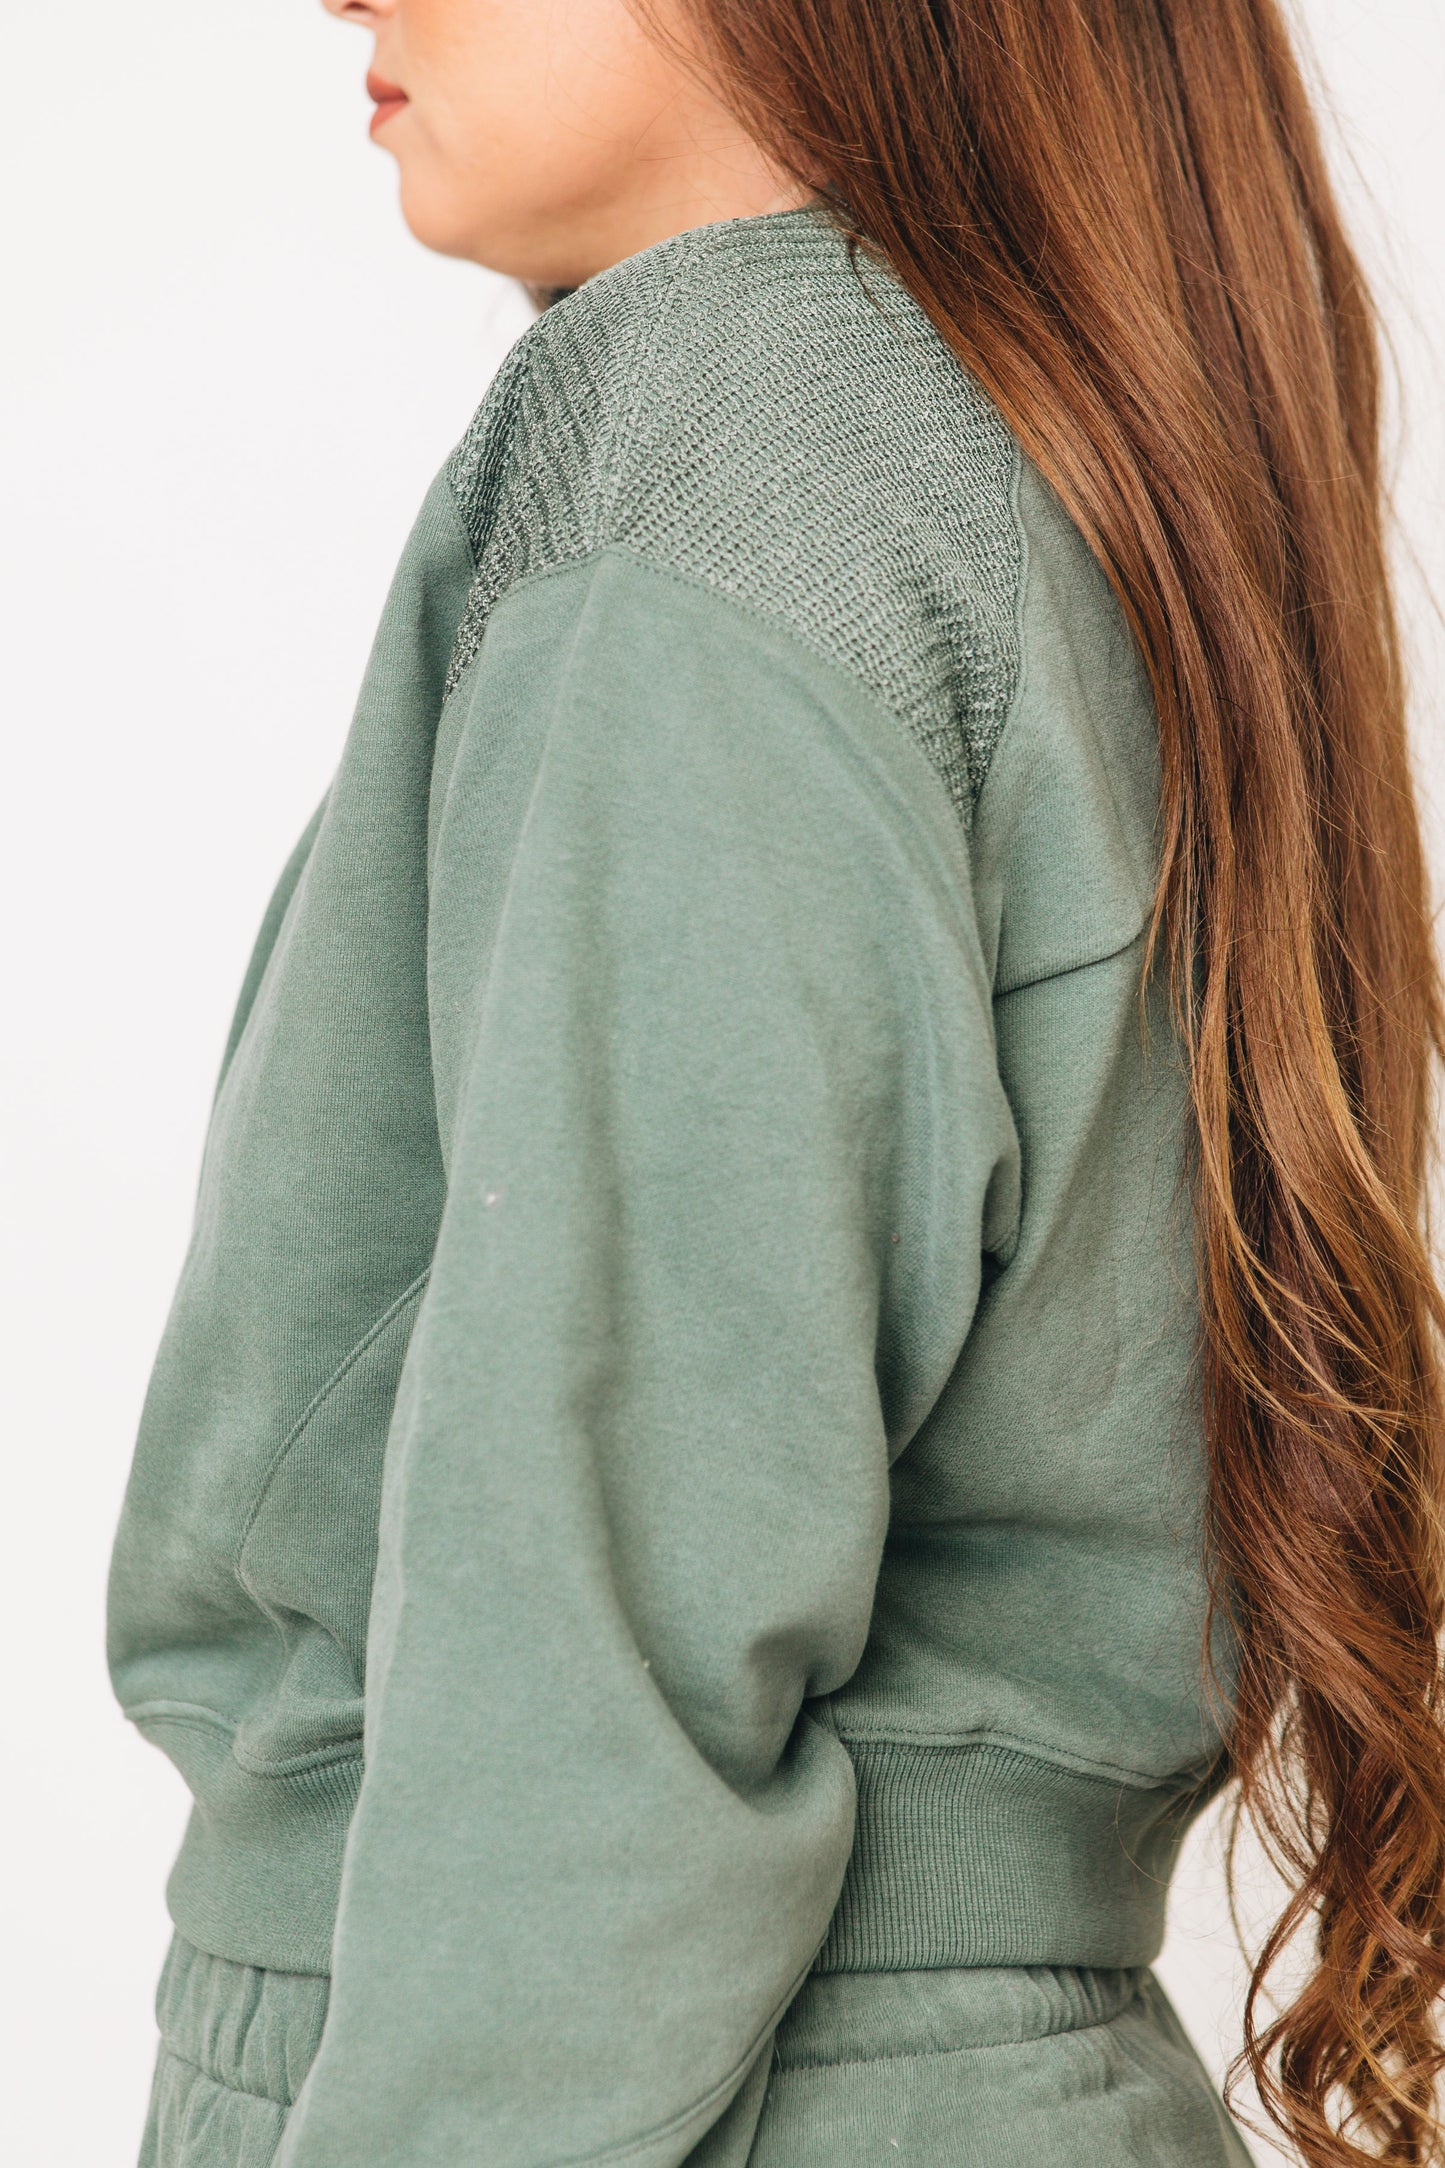 Ivy Verde Sweatsuit Set with Mesh Detail (S-L)